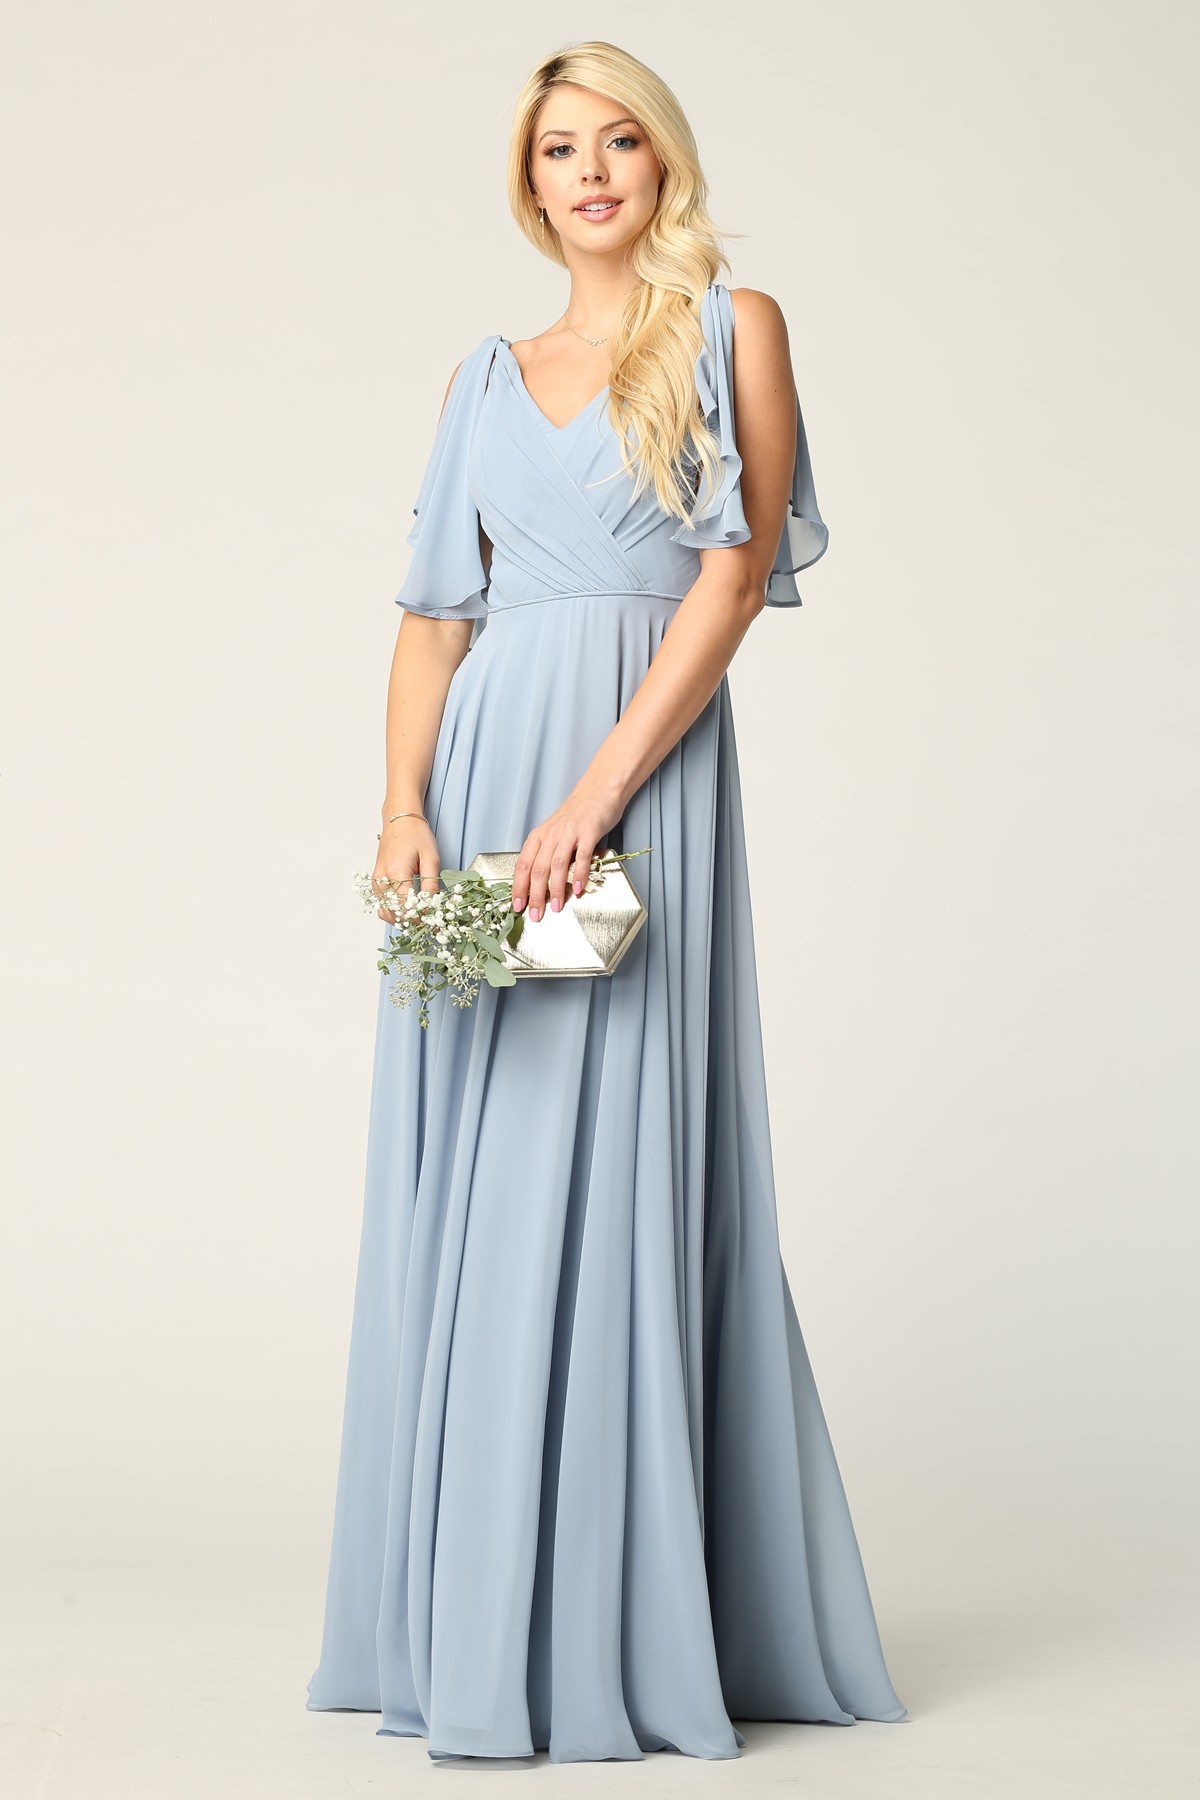 Keren B #30 Bridesmaid dresses Powder blue